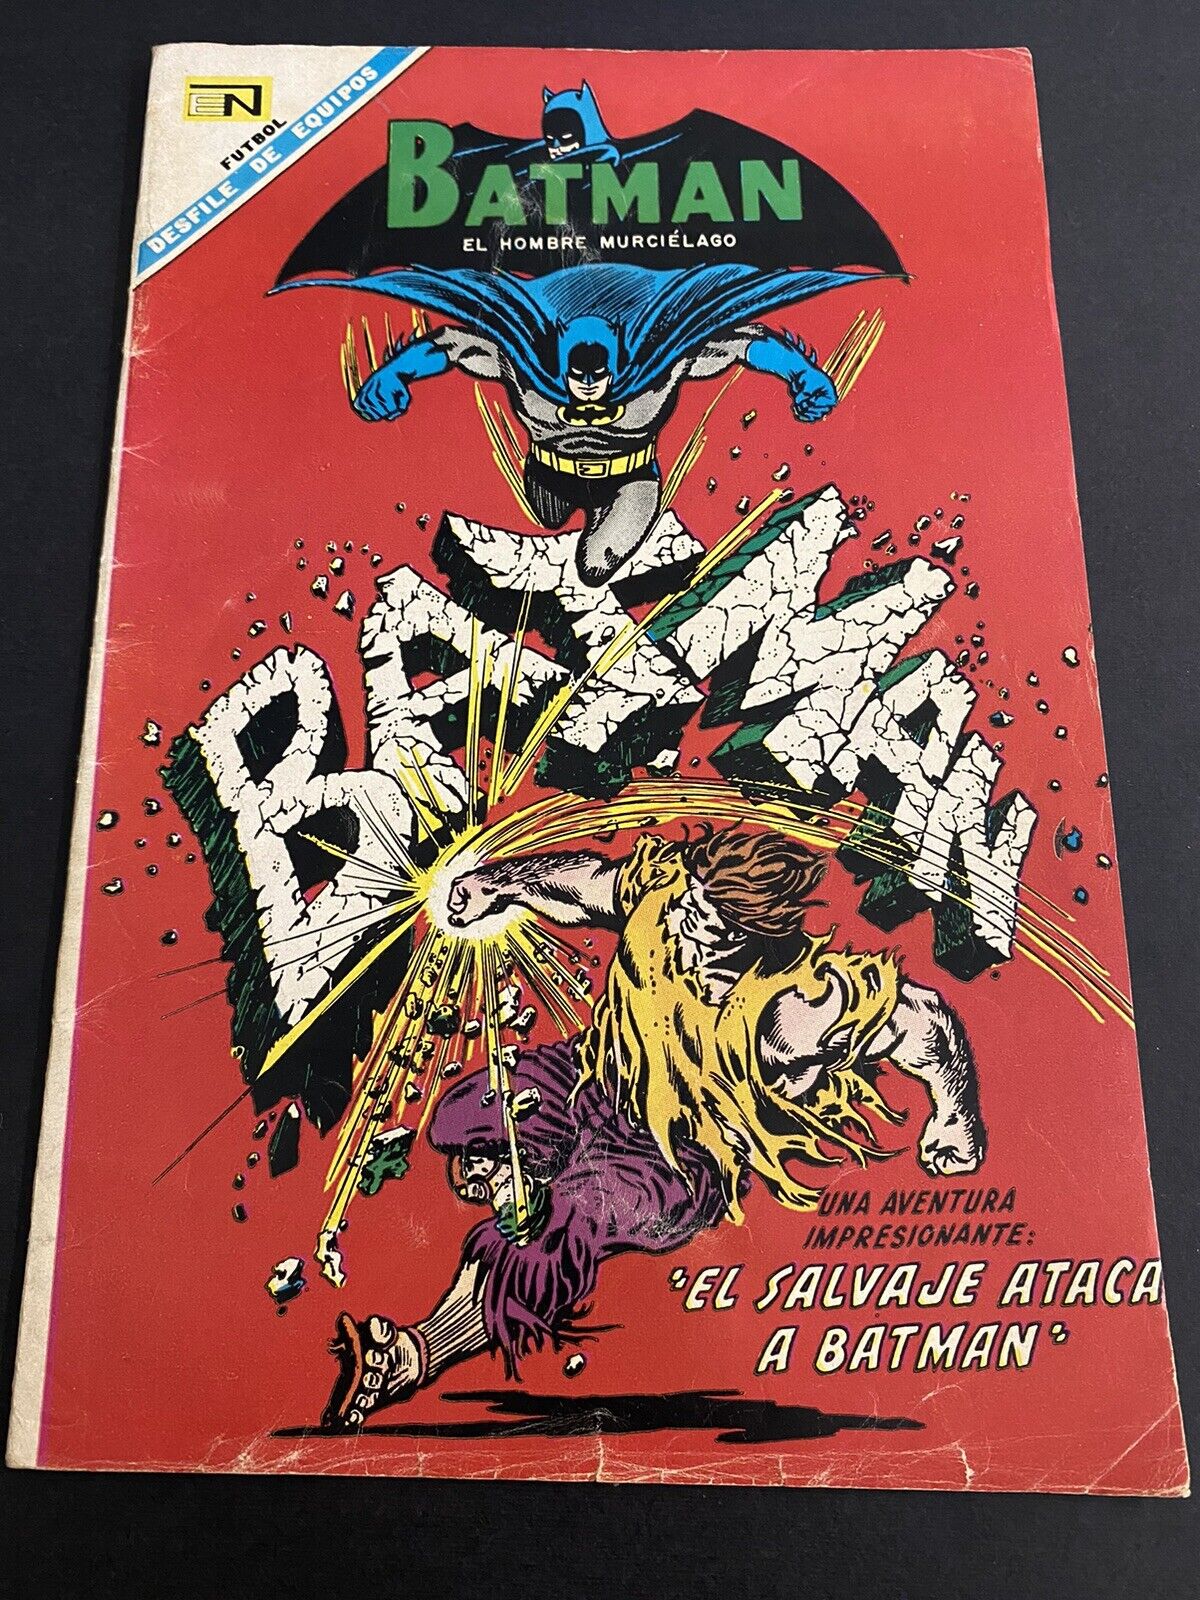 Batman El Hombre Murciélago 439, Key Blockbuster Cover. Extremely HTF/Rare 1968